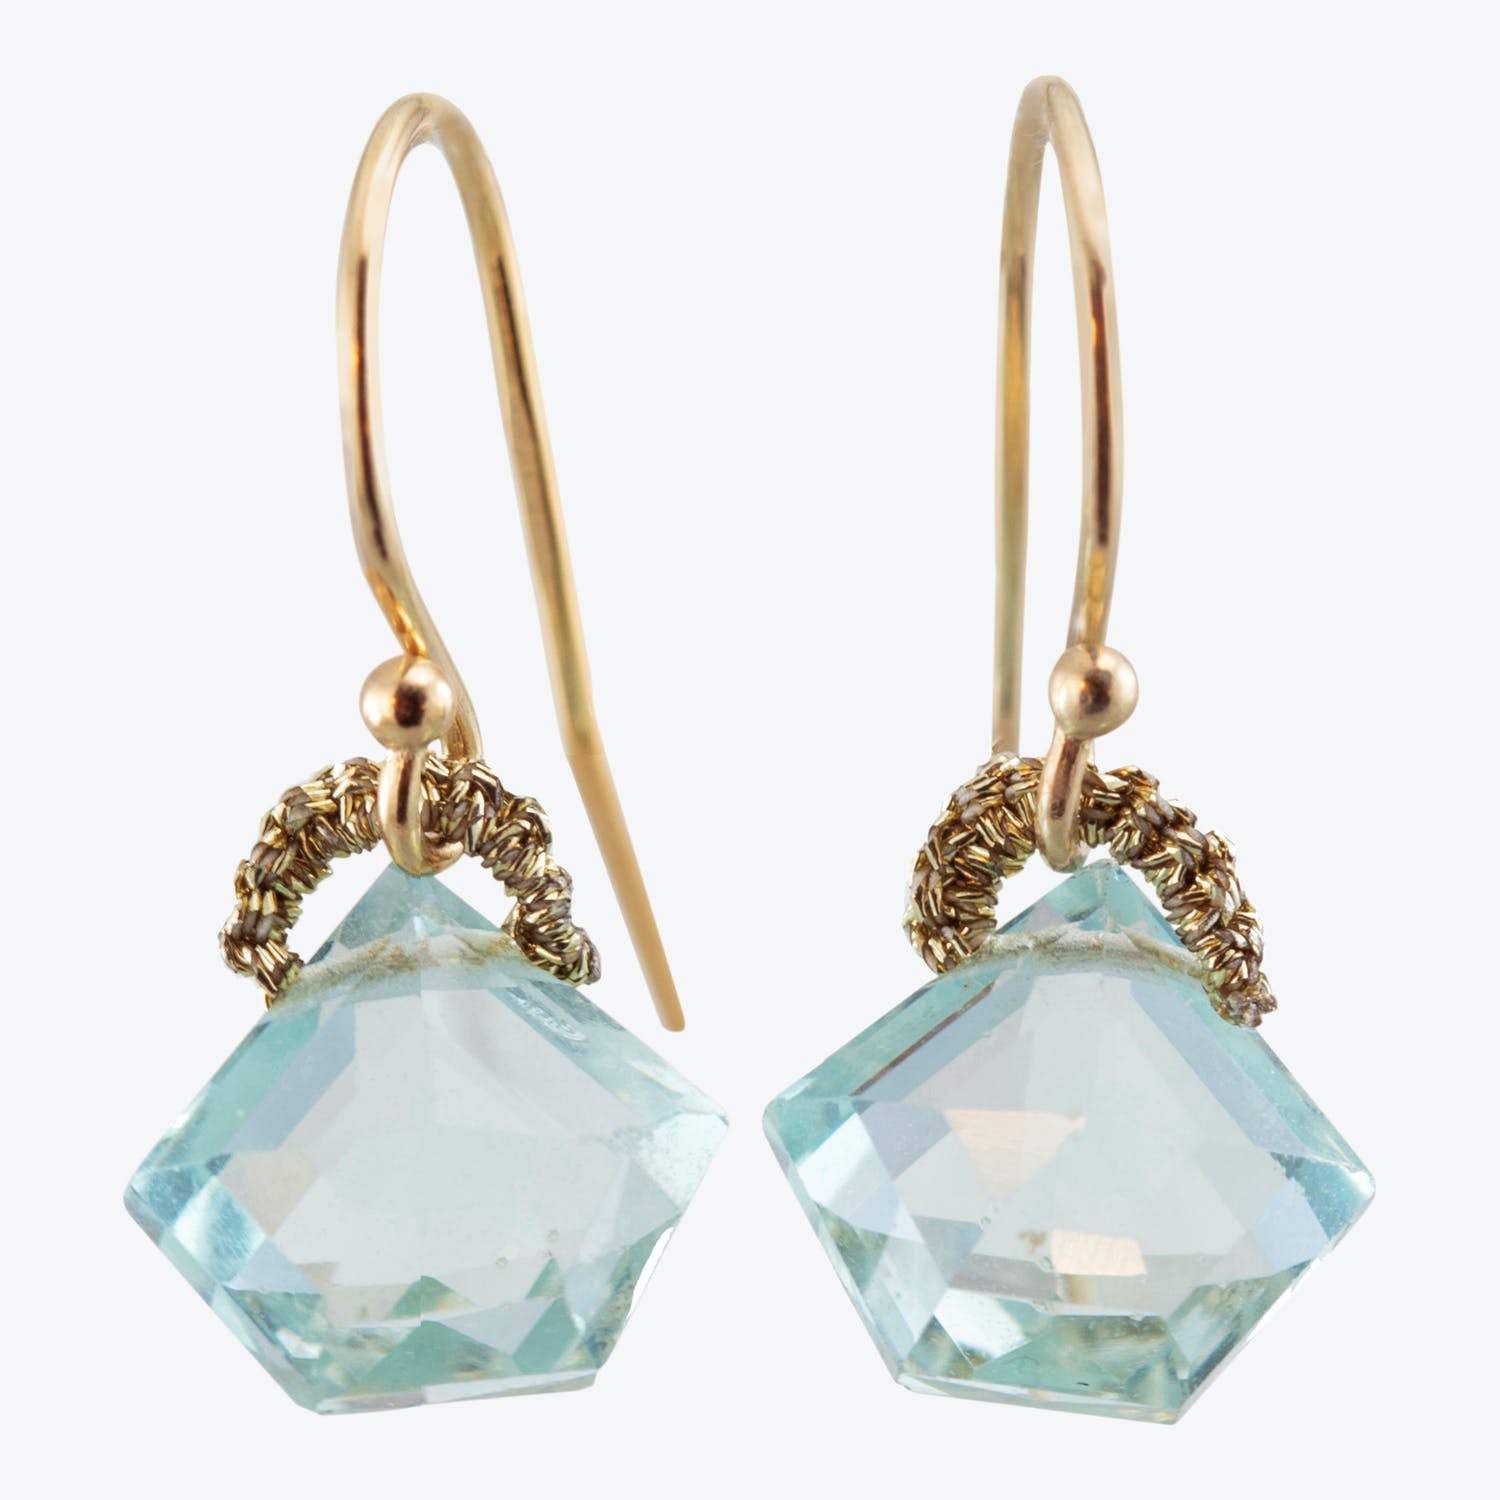 Elegant and versatile dangle earrings with stunning aqua gemstone accents.